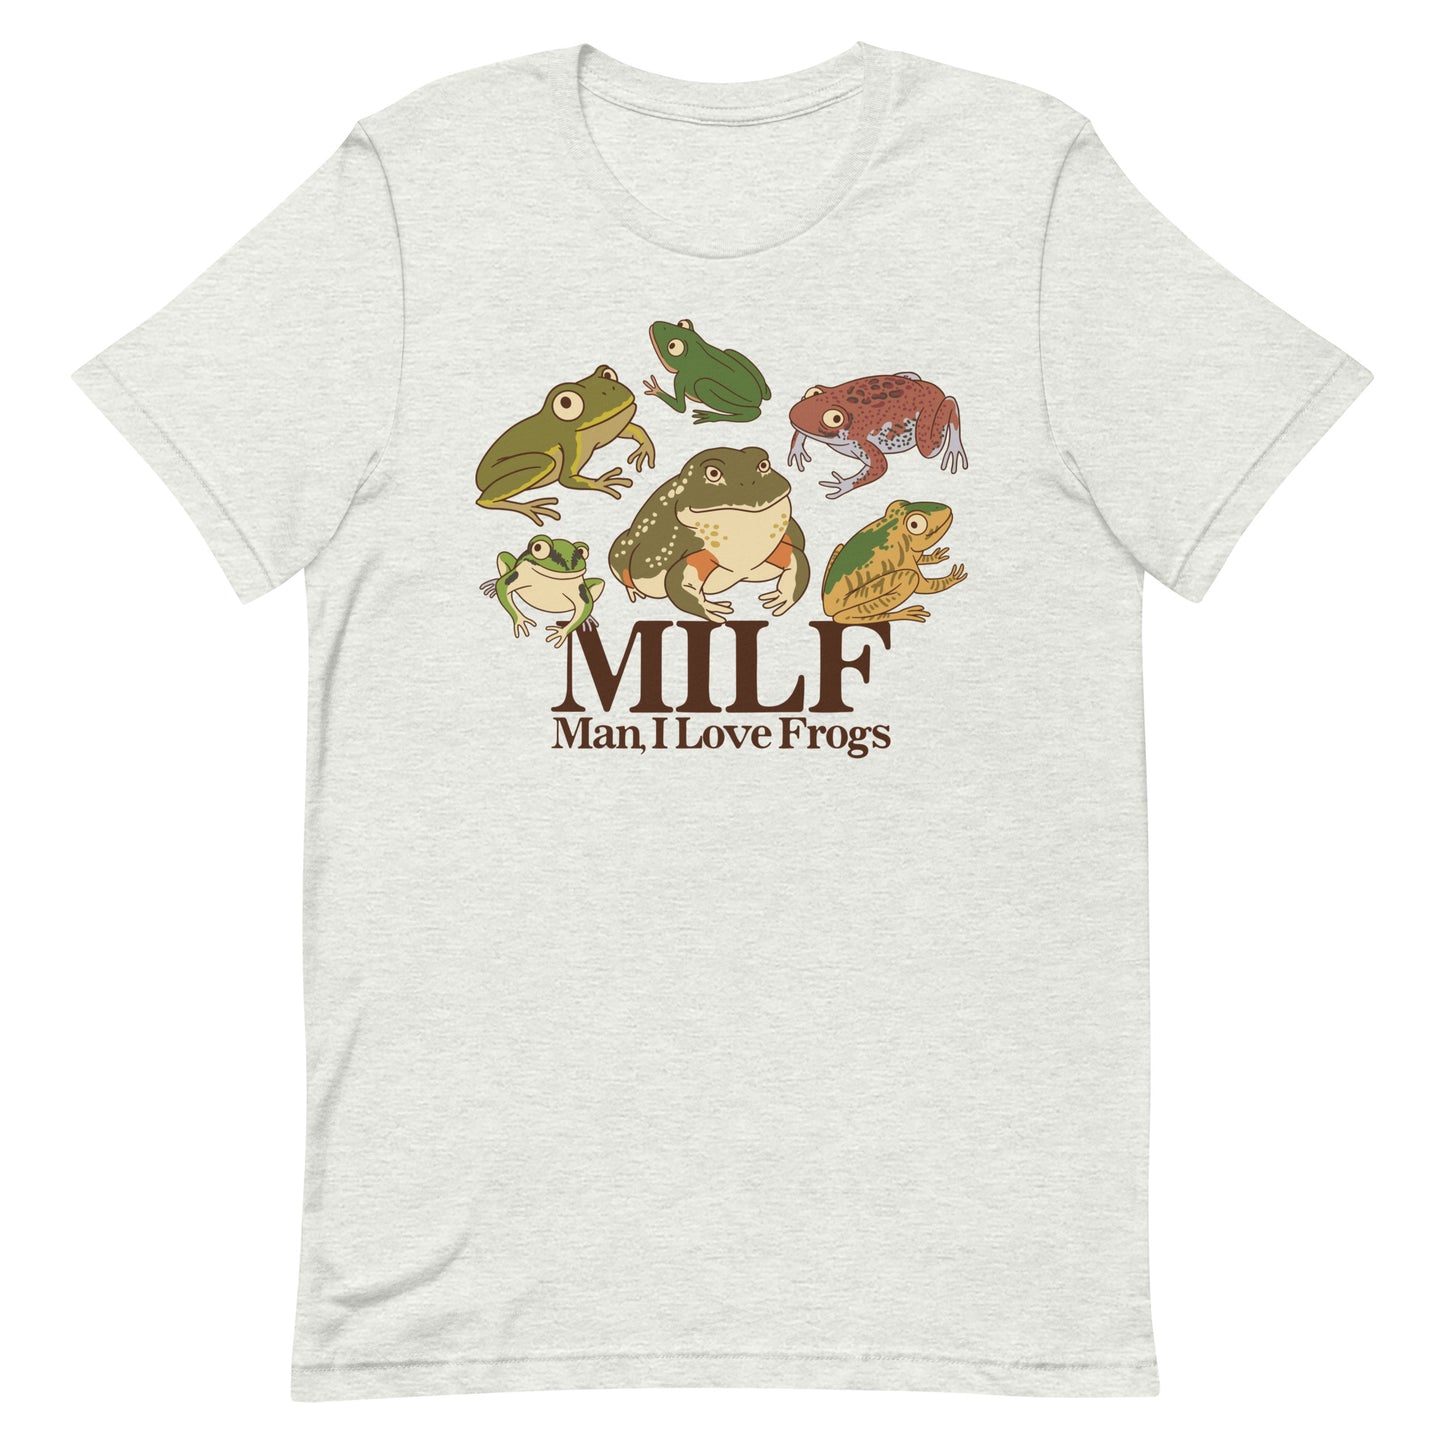 MILF (Man I Love Frogs) Unisex t-shirt